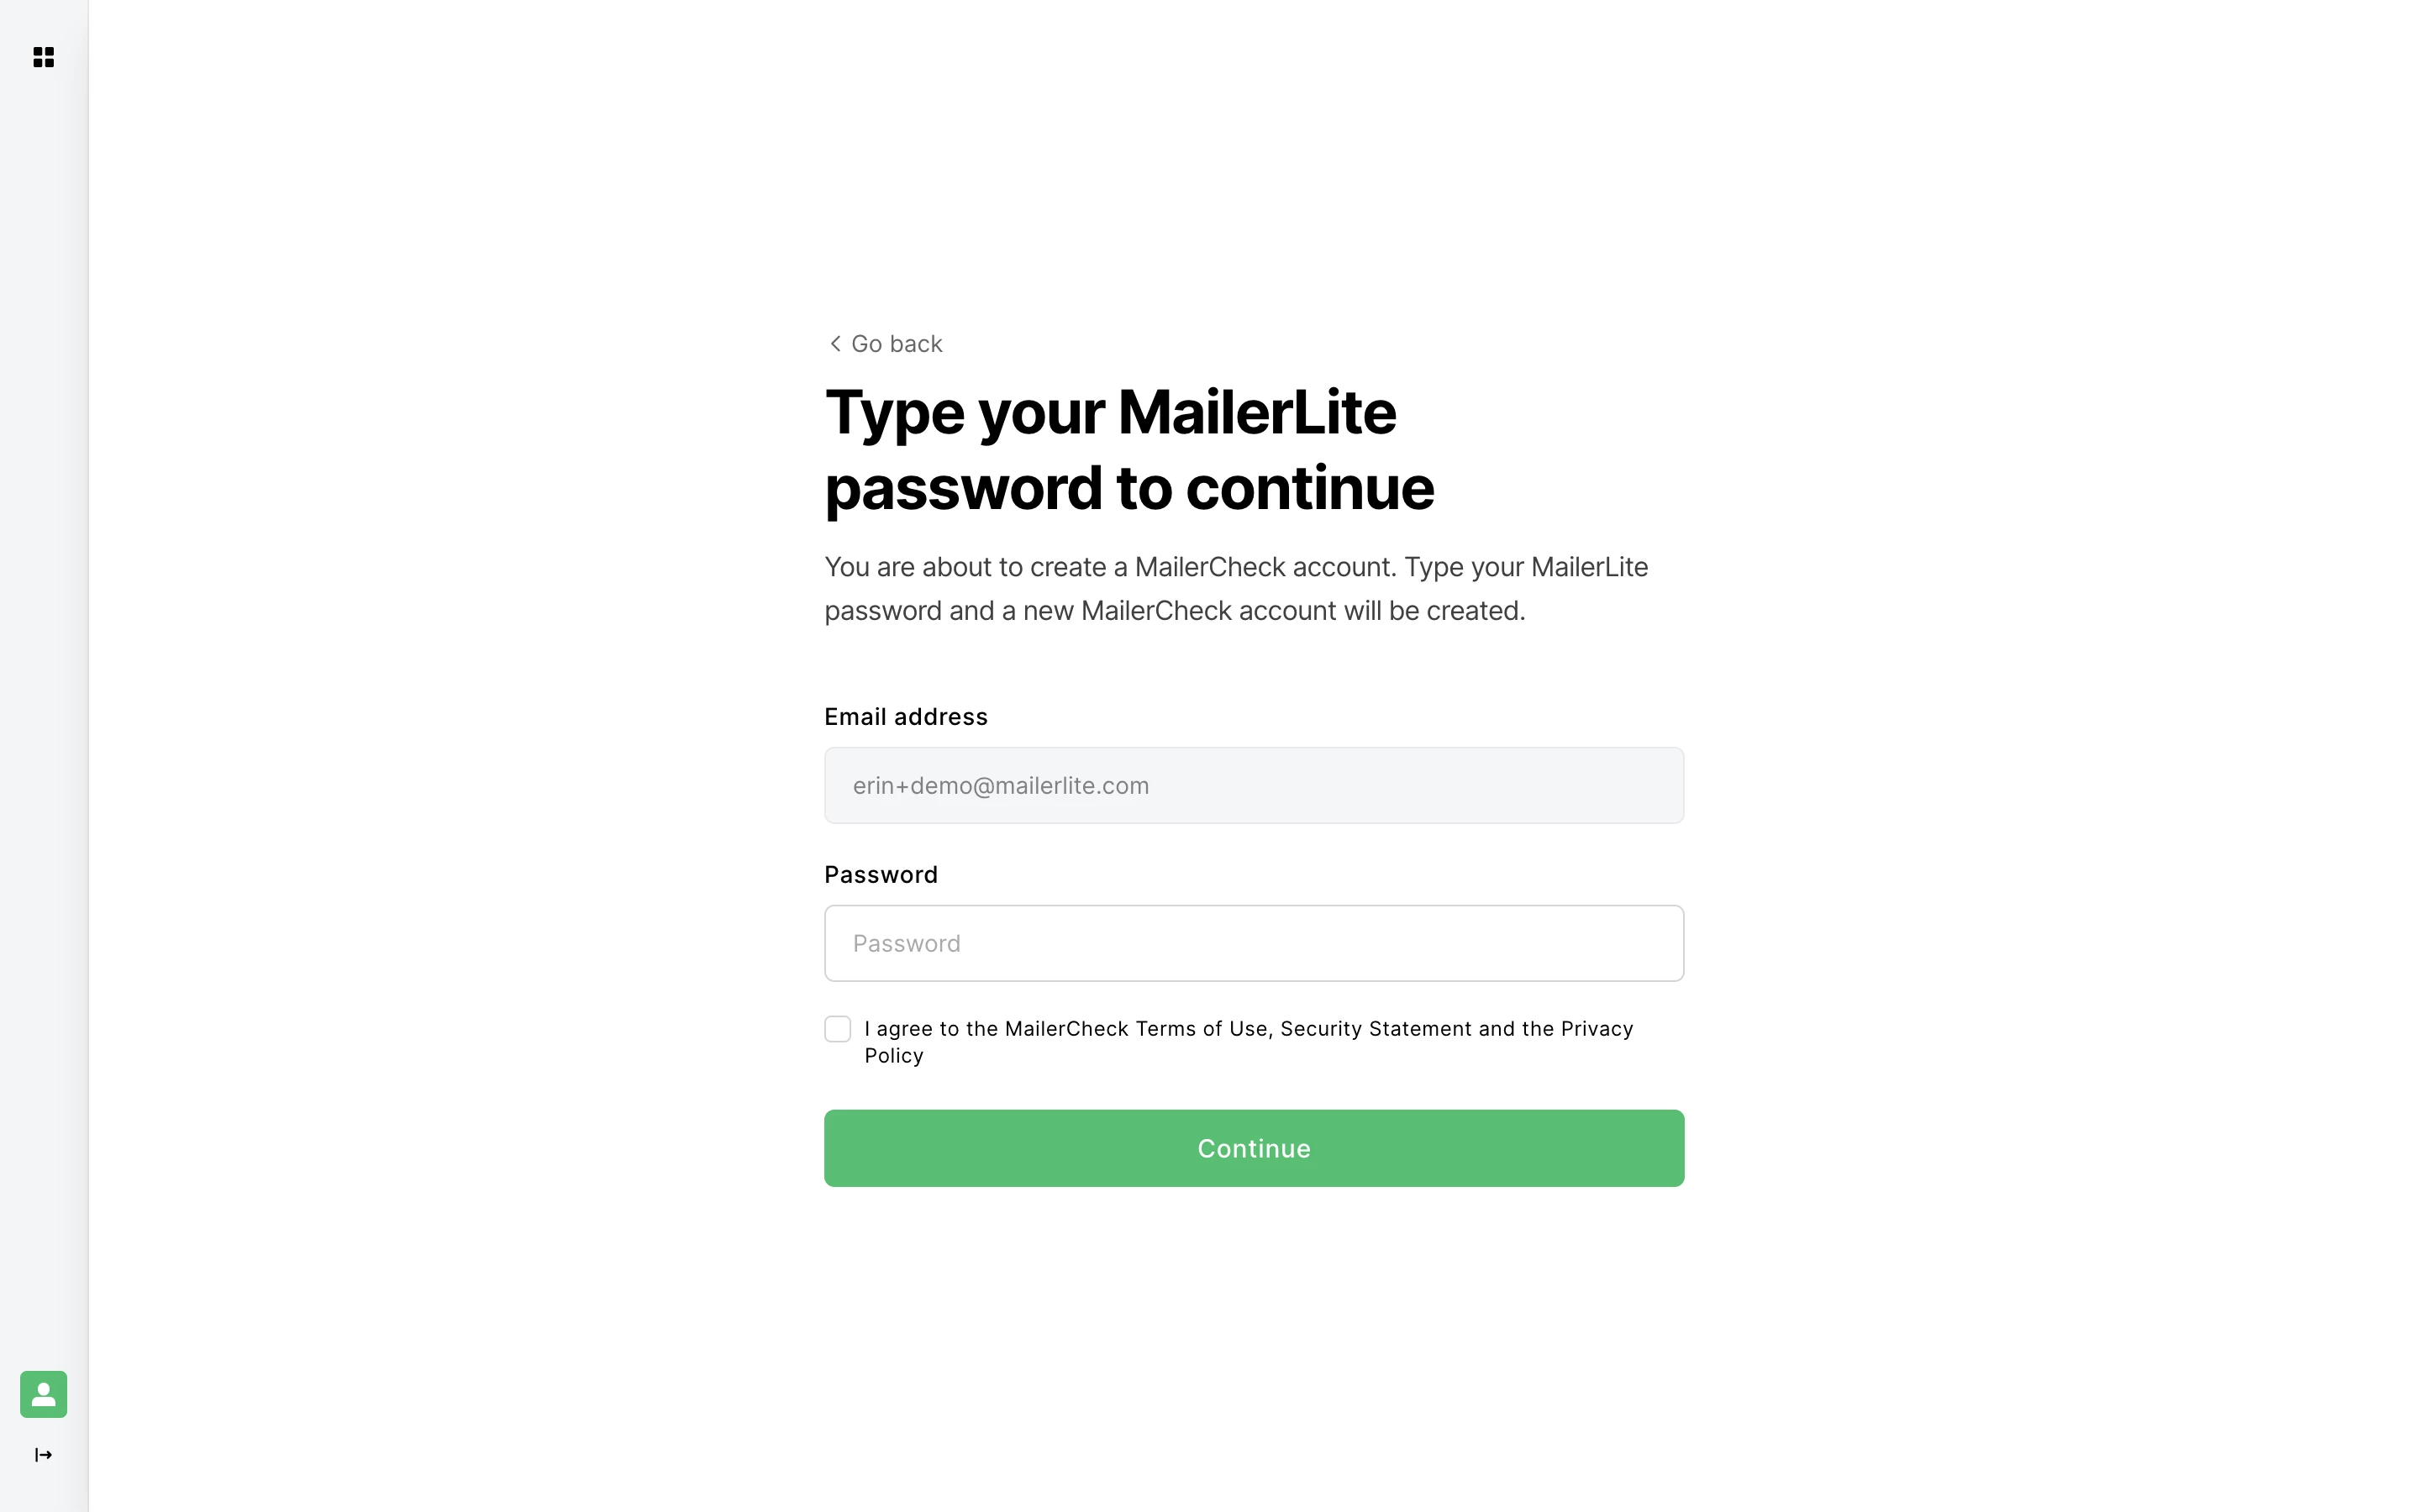 Create a new MailerCheck account